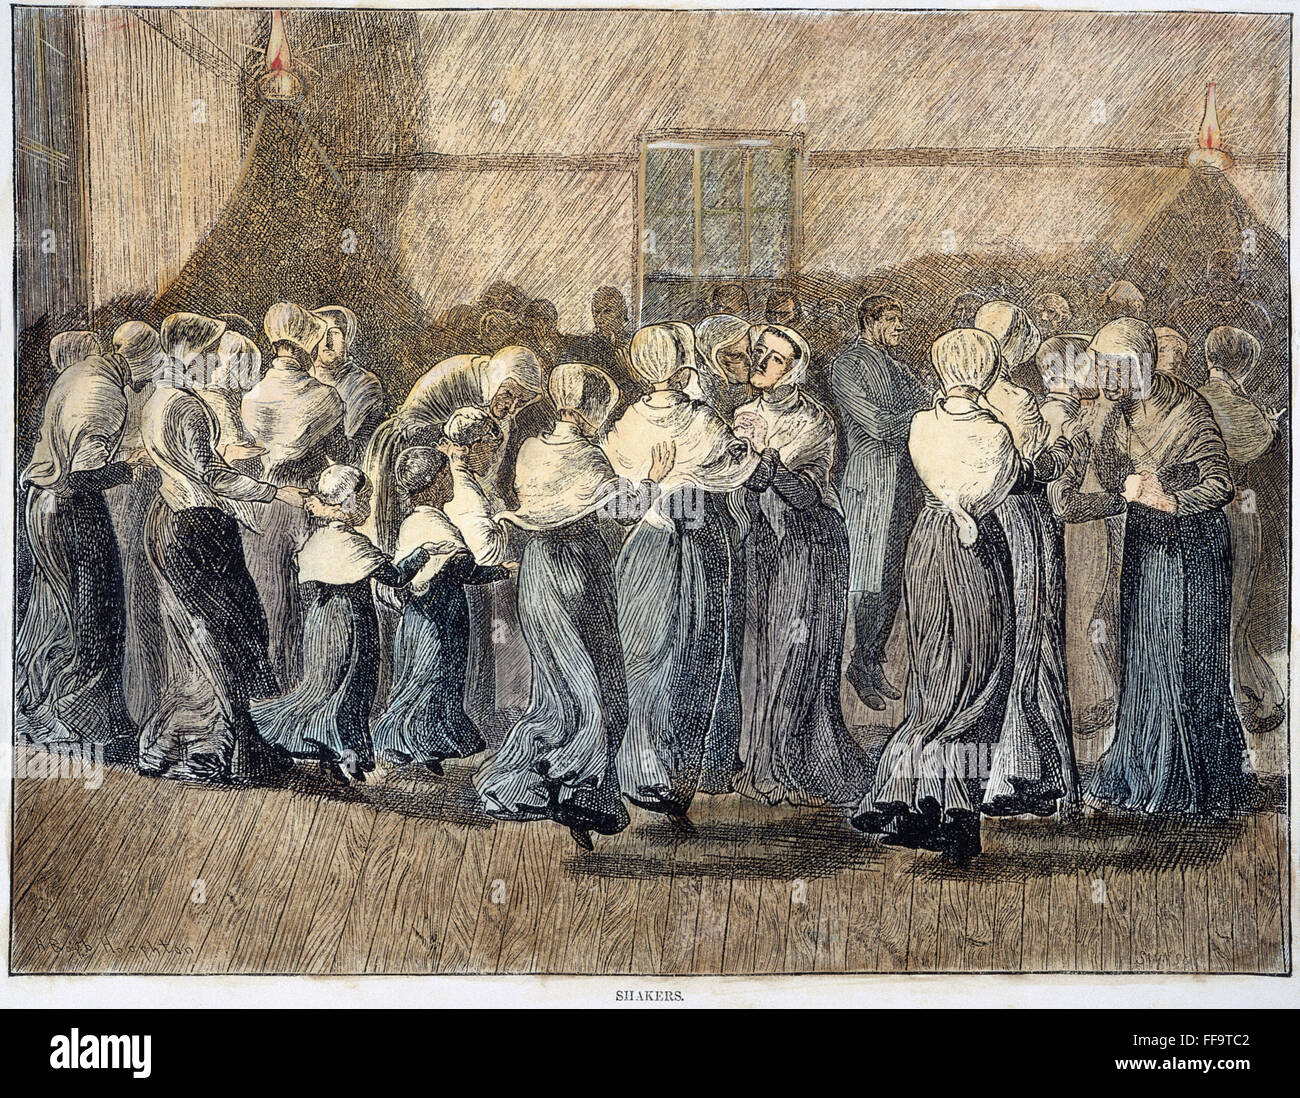 SHAKERS DANCING. /nWood engraving, American, 1870. Stock Photo